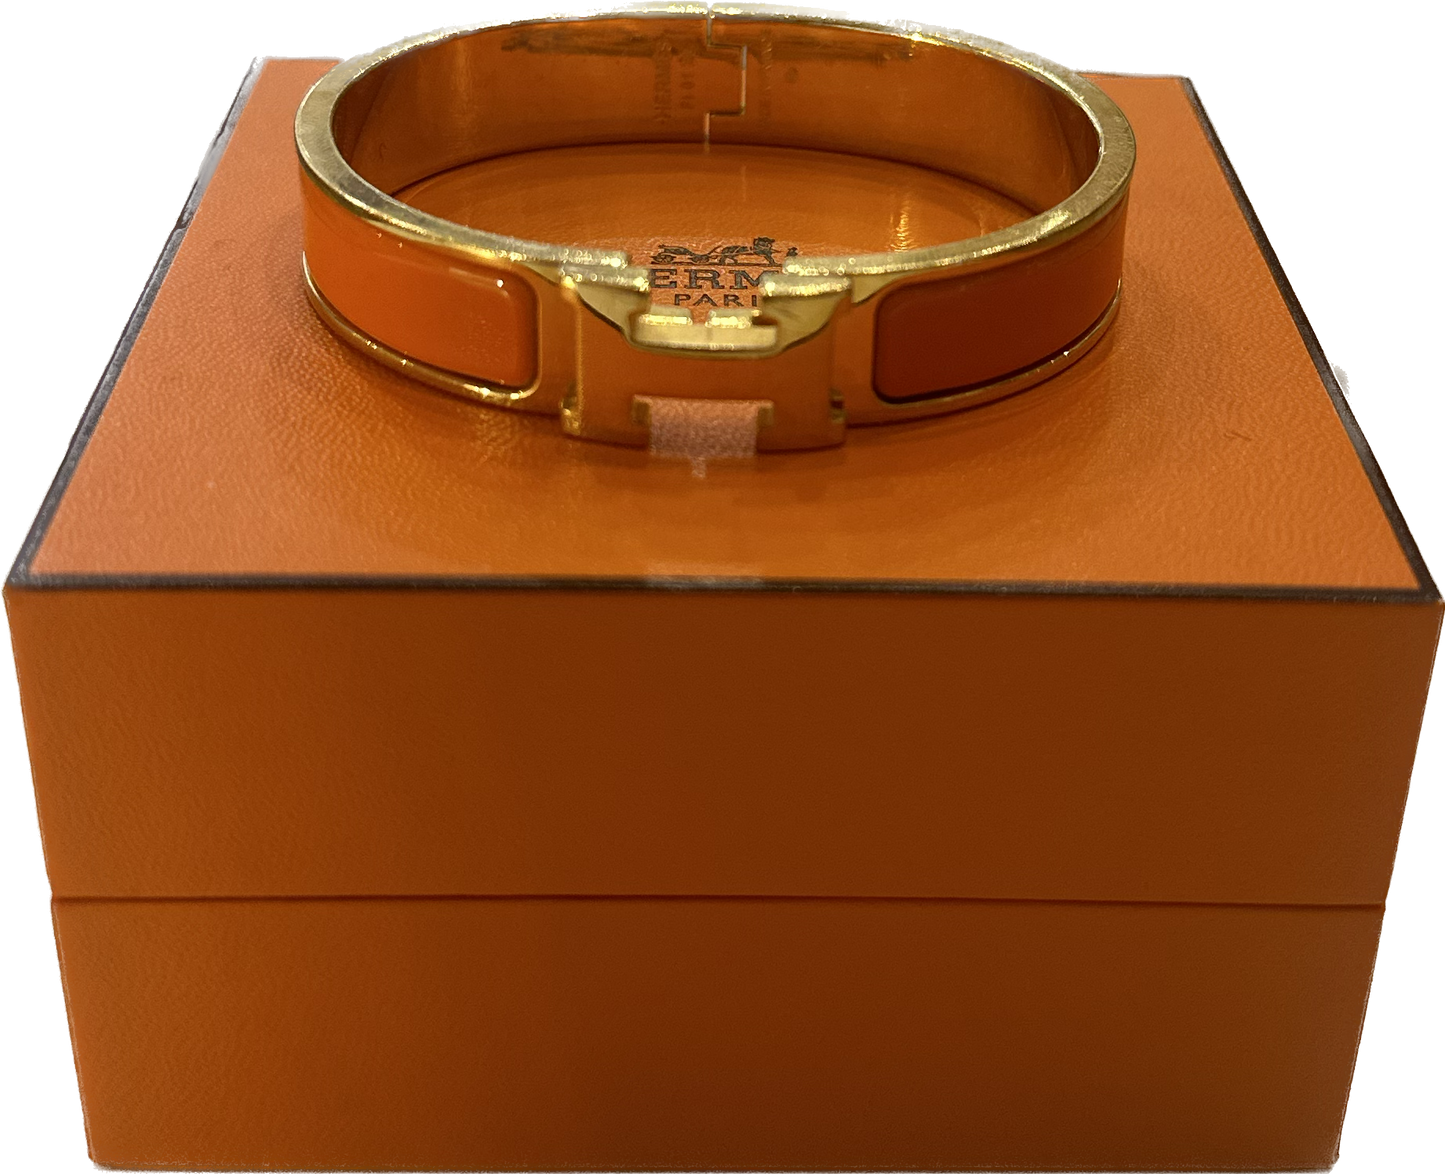 Hermès Clic Clac H bracelet